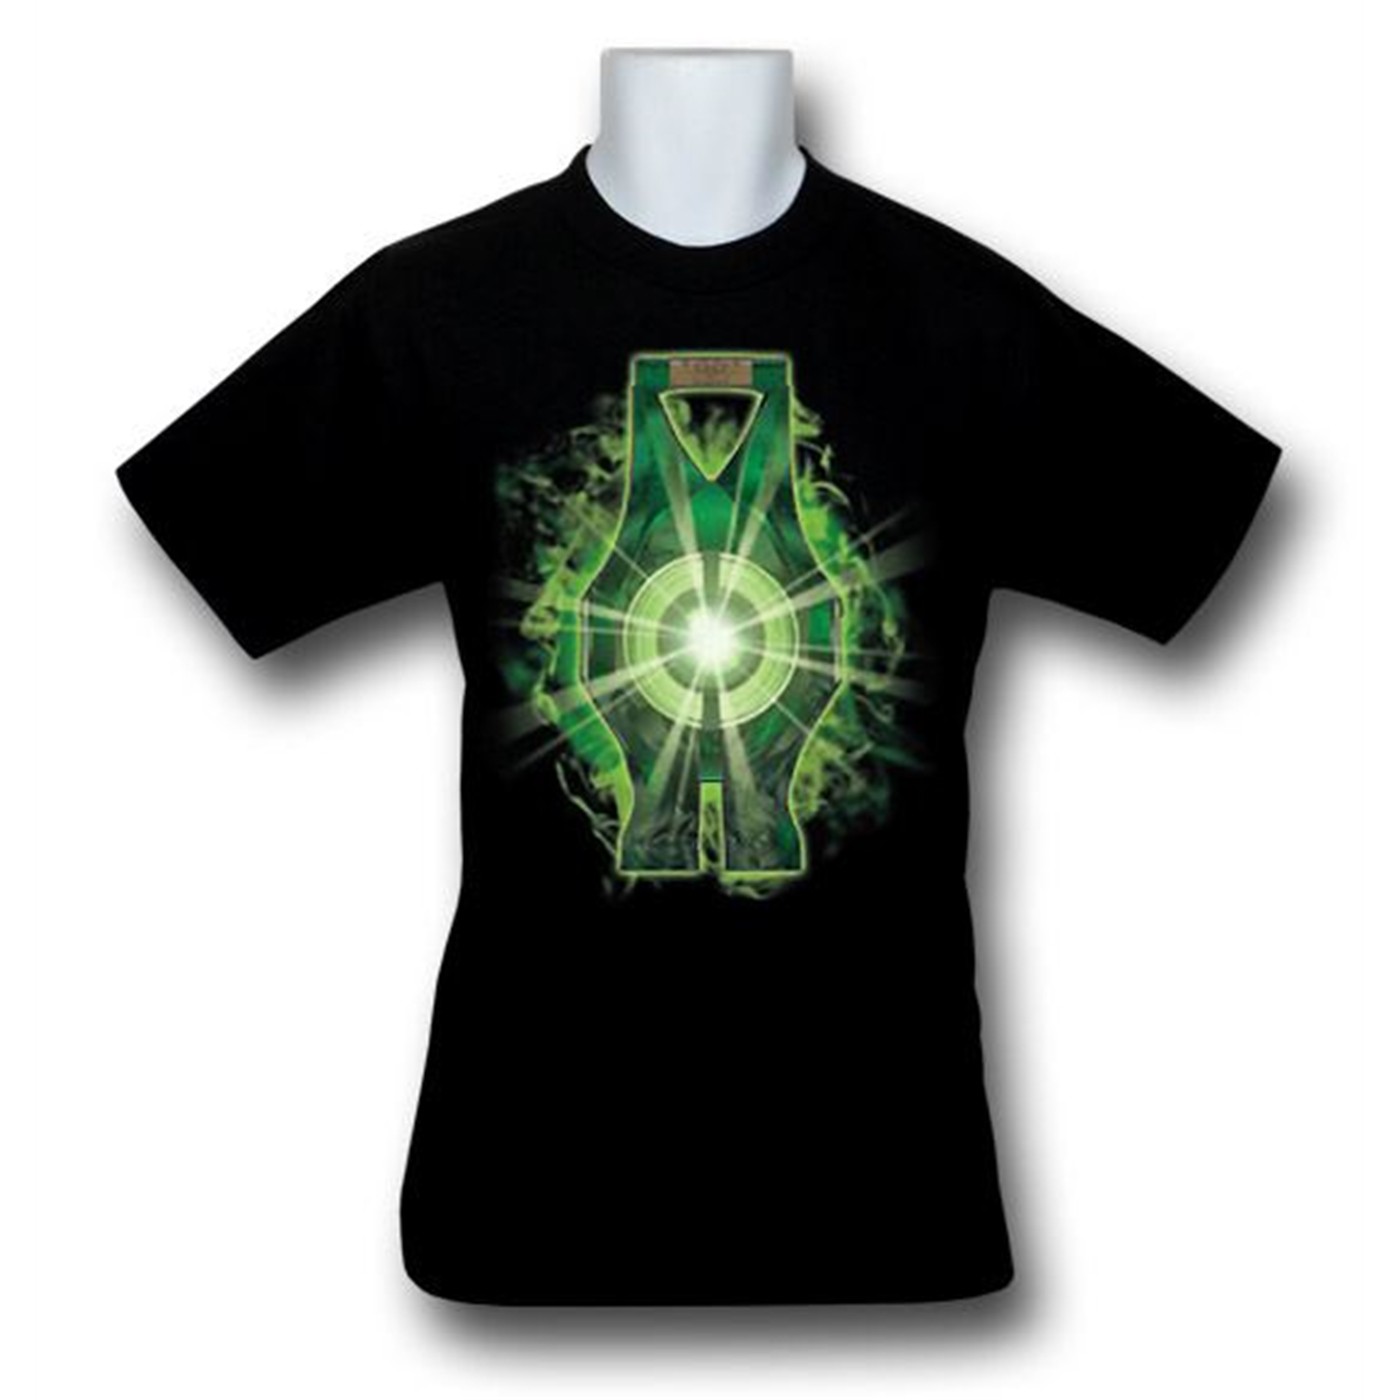 Green Lantern Movie Power Battery T-Shirt